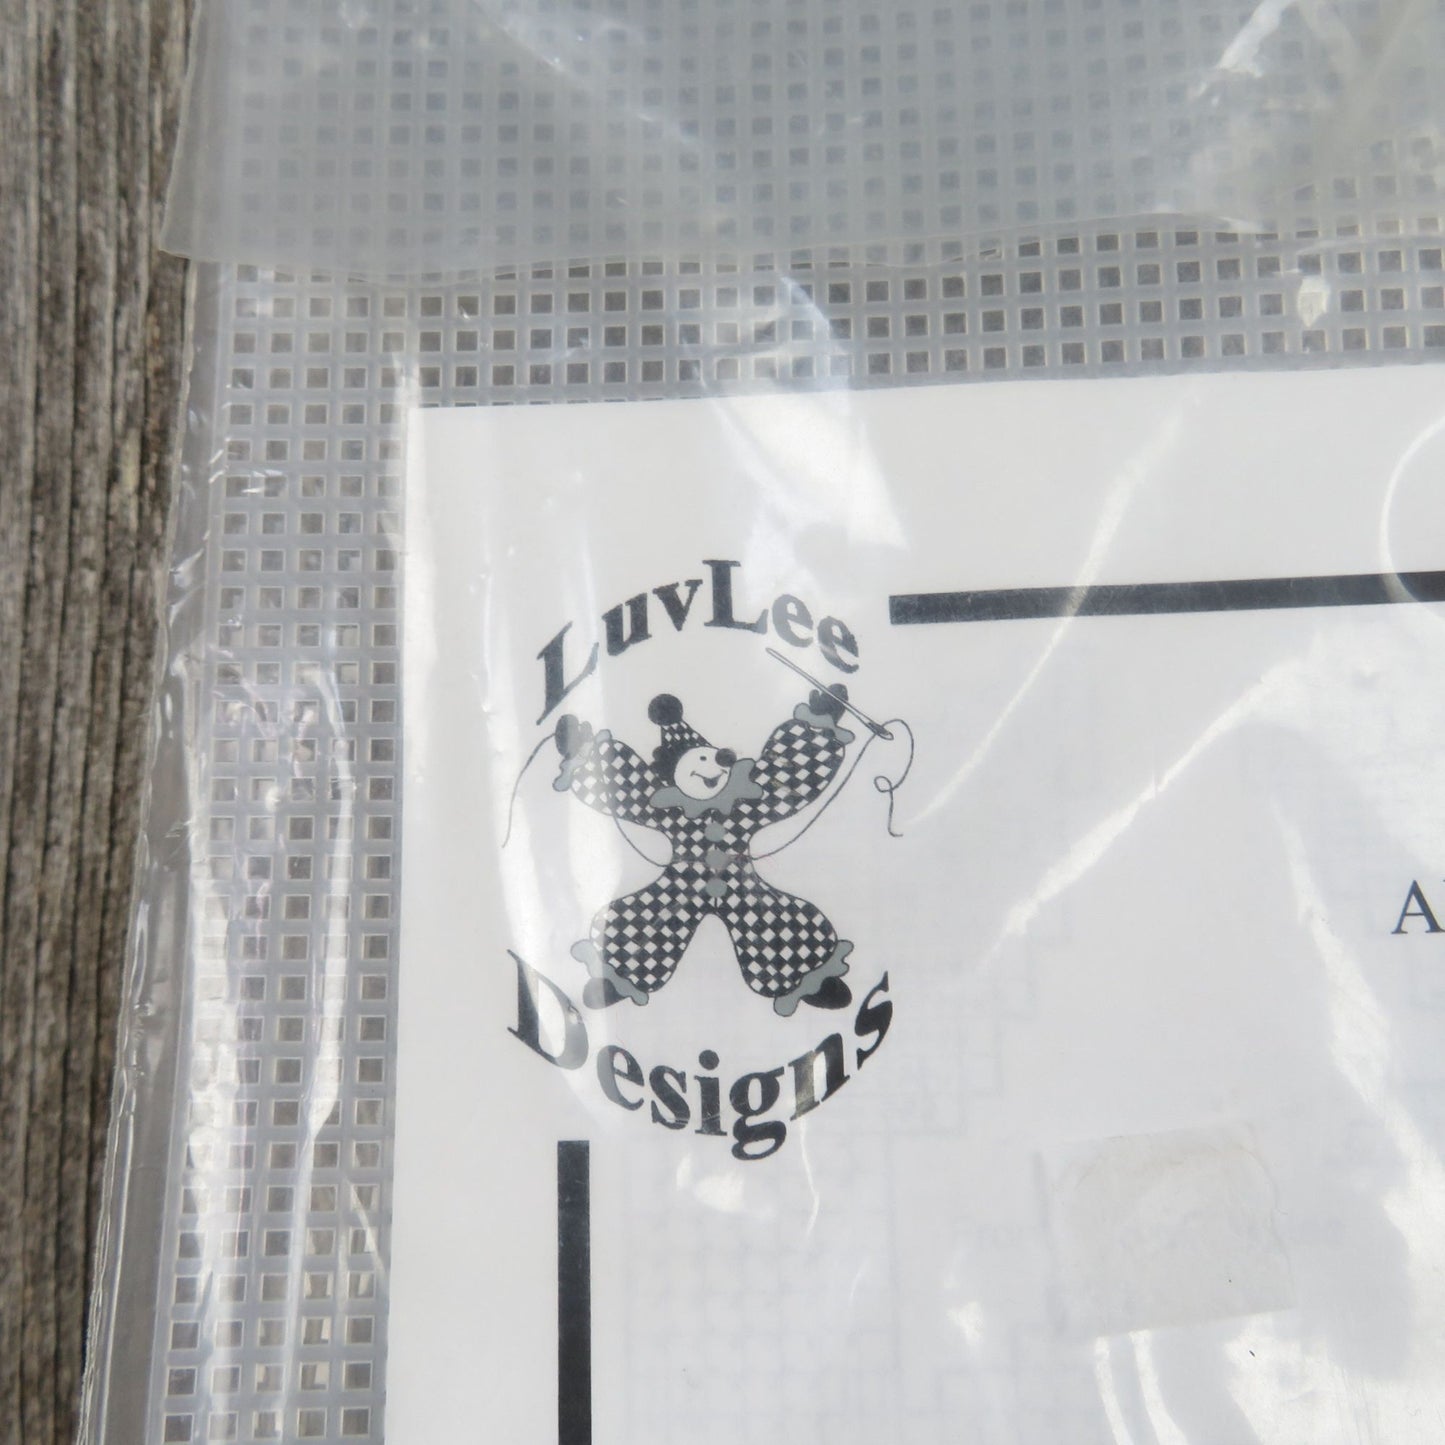 Apple Coasters and Sunbonnet Holder Plastic Canvas Kit LuvLee Designs Needlepoint Kit